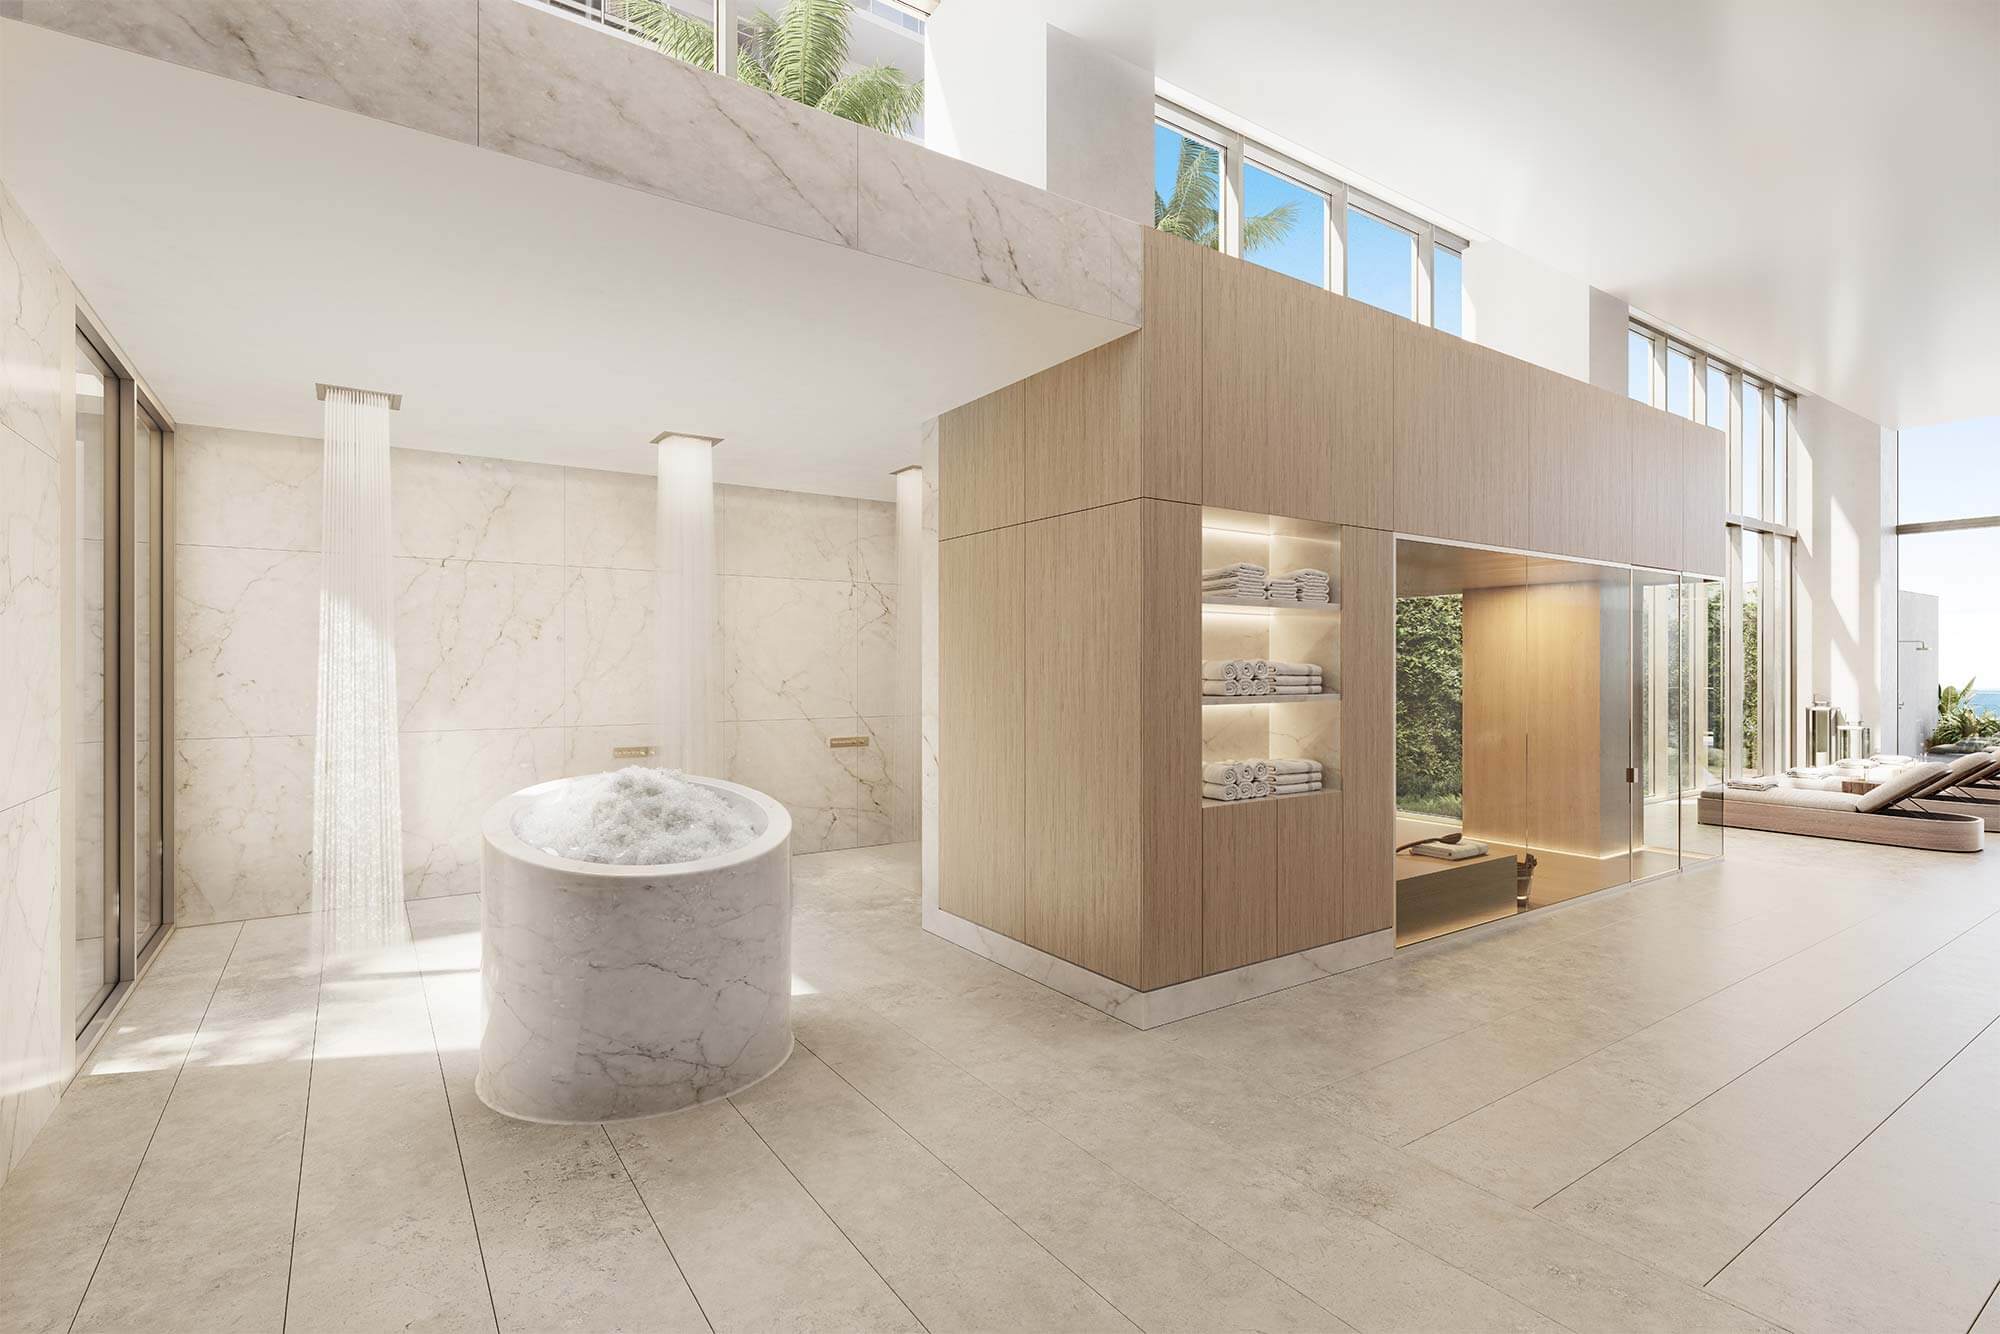 luxury spa interiors with ice bath